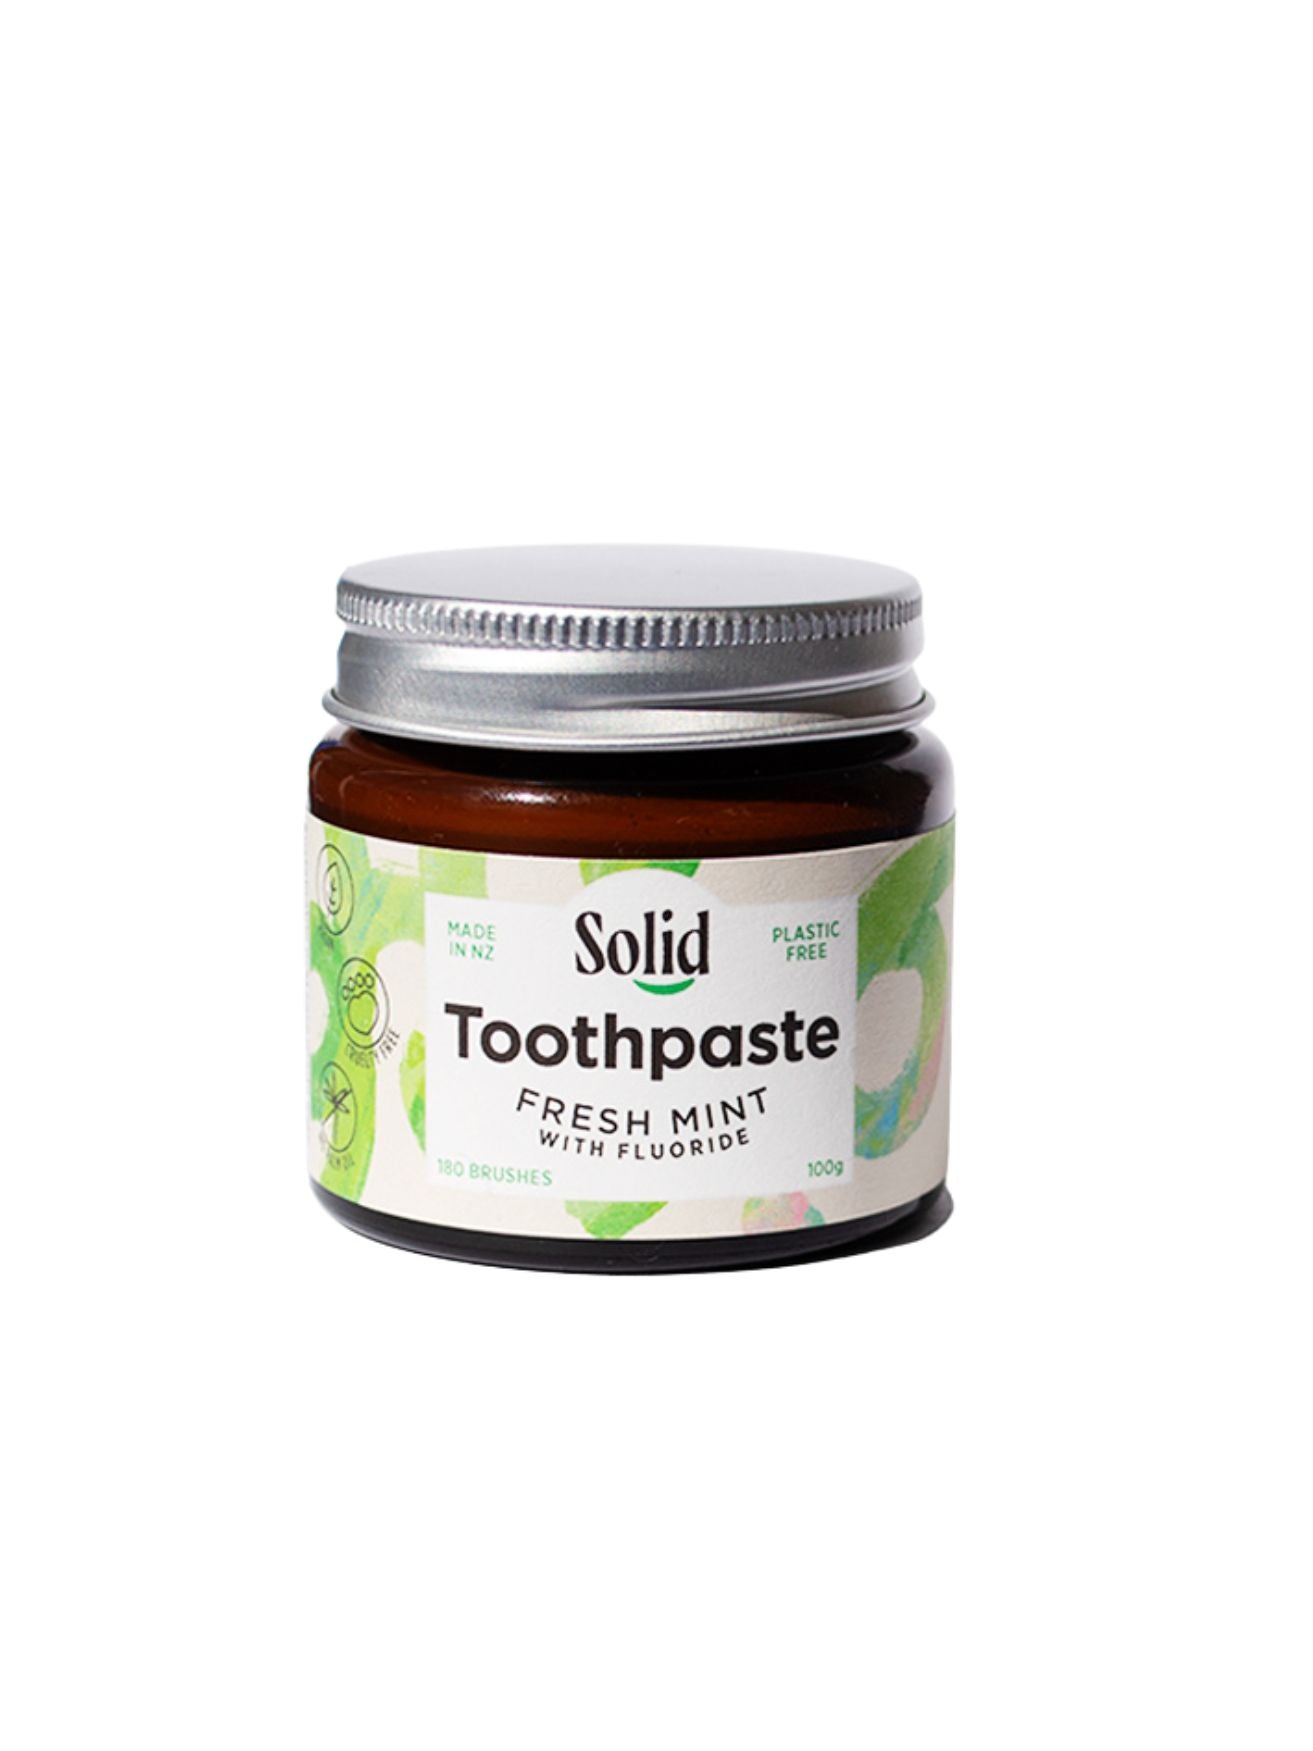 Solid Toothpaste Jar